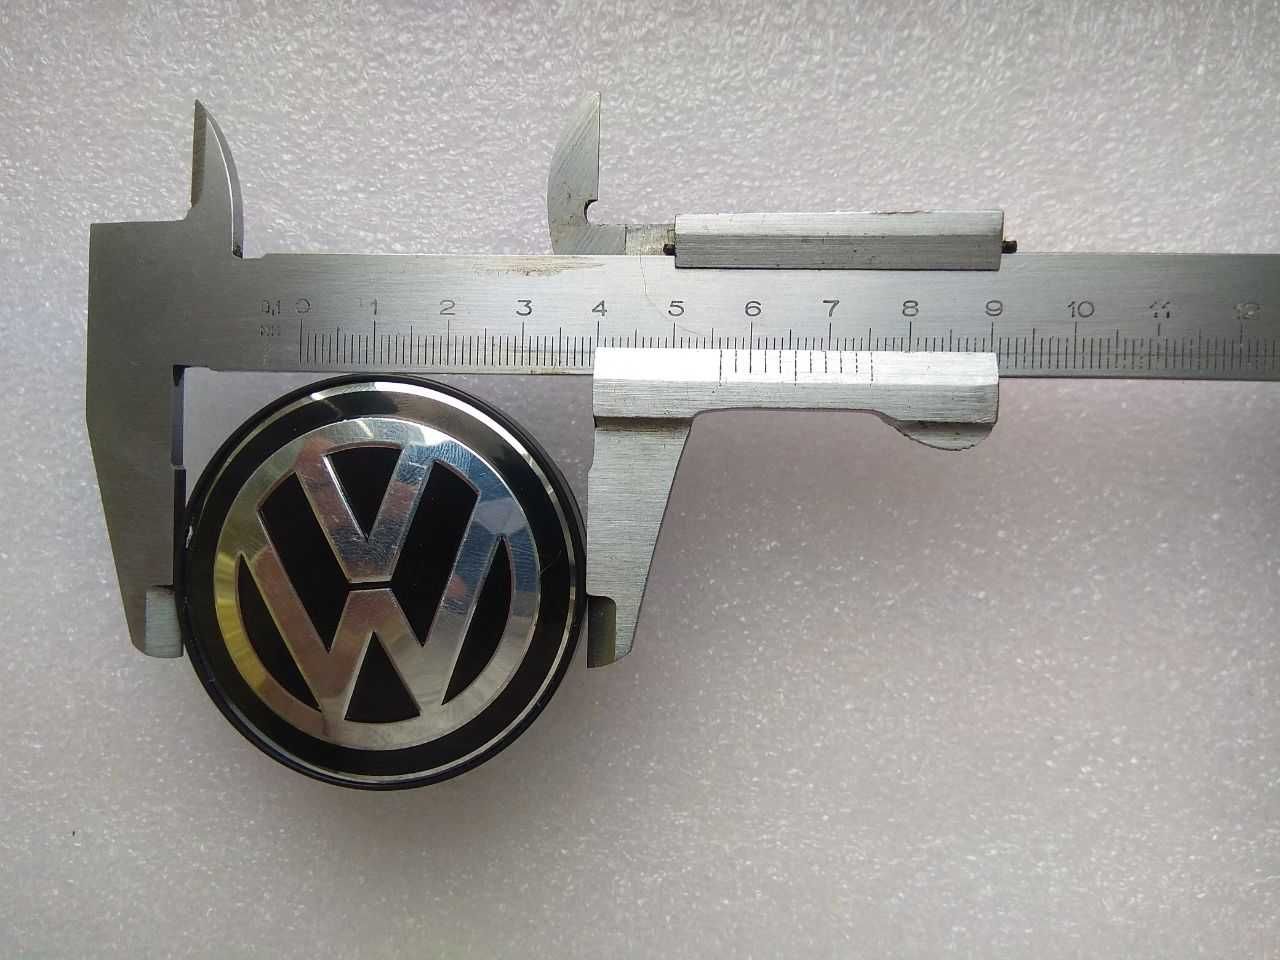 Заглушки для литых дисков VW (колпачки)